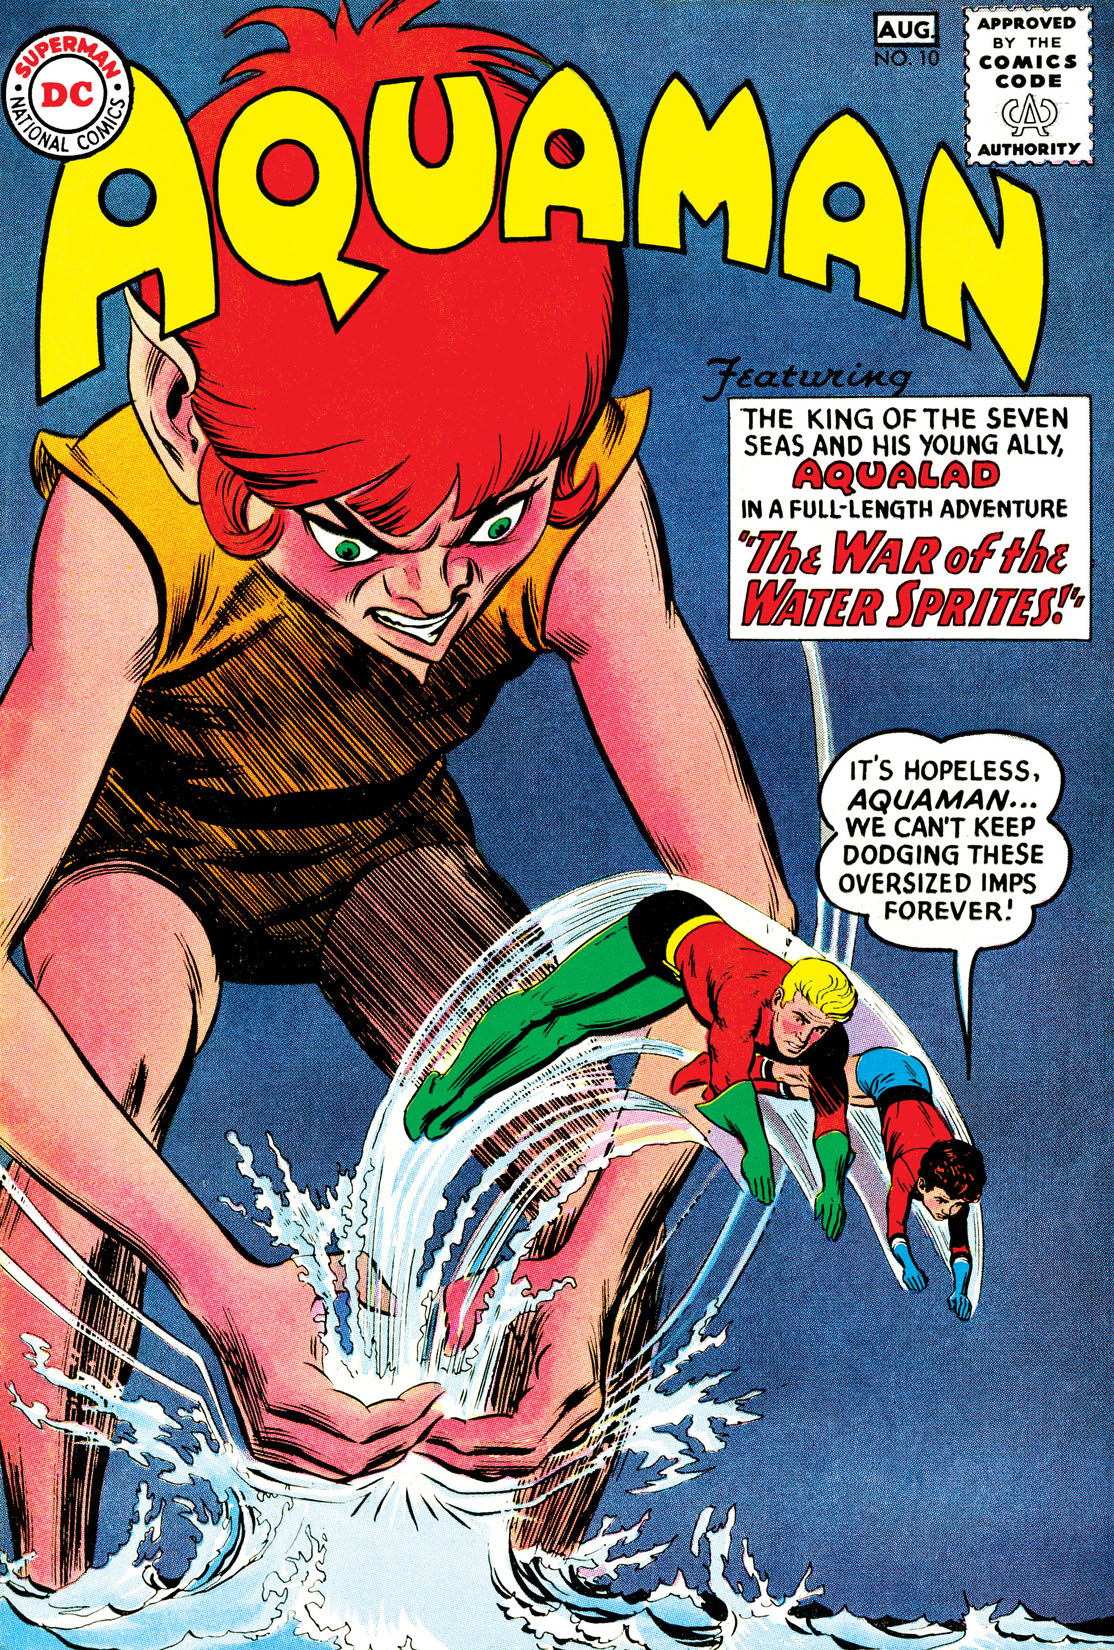 Aquaman (1962-) #10 preview images